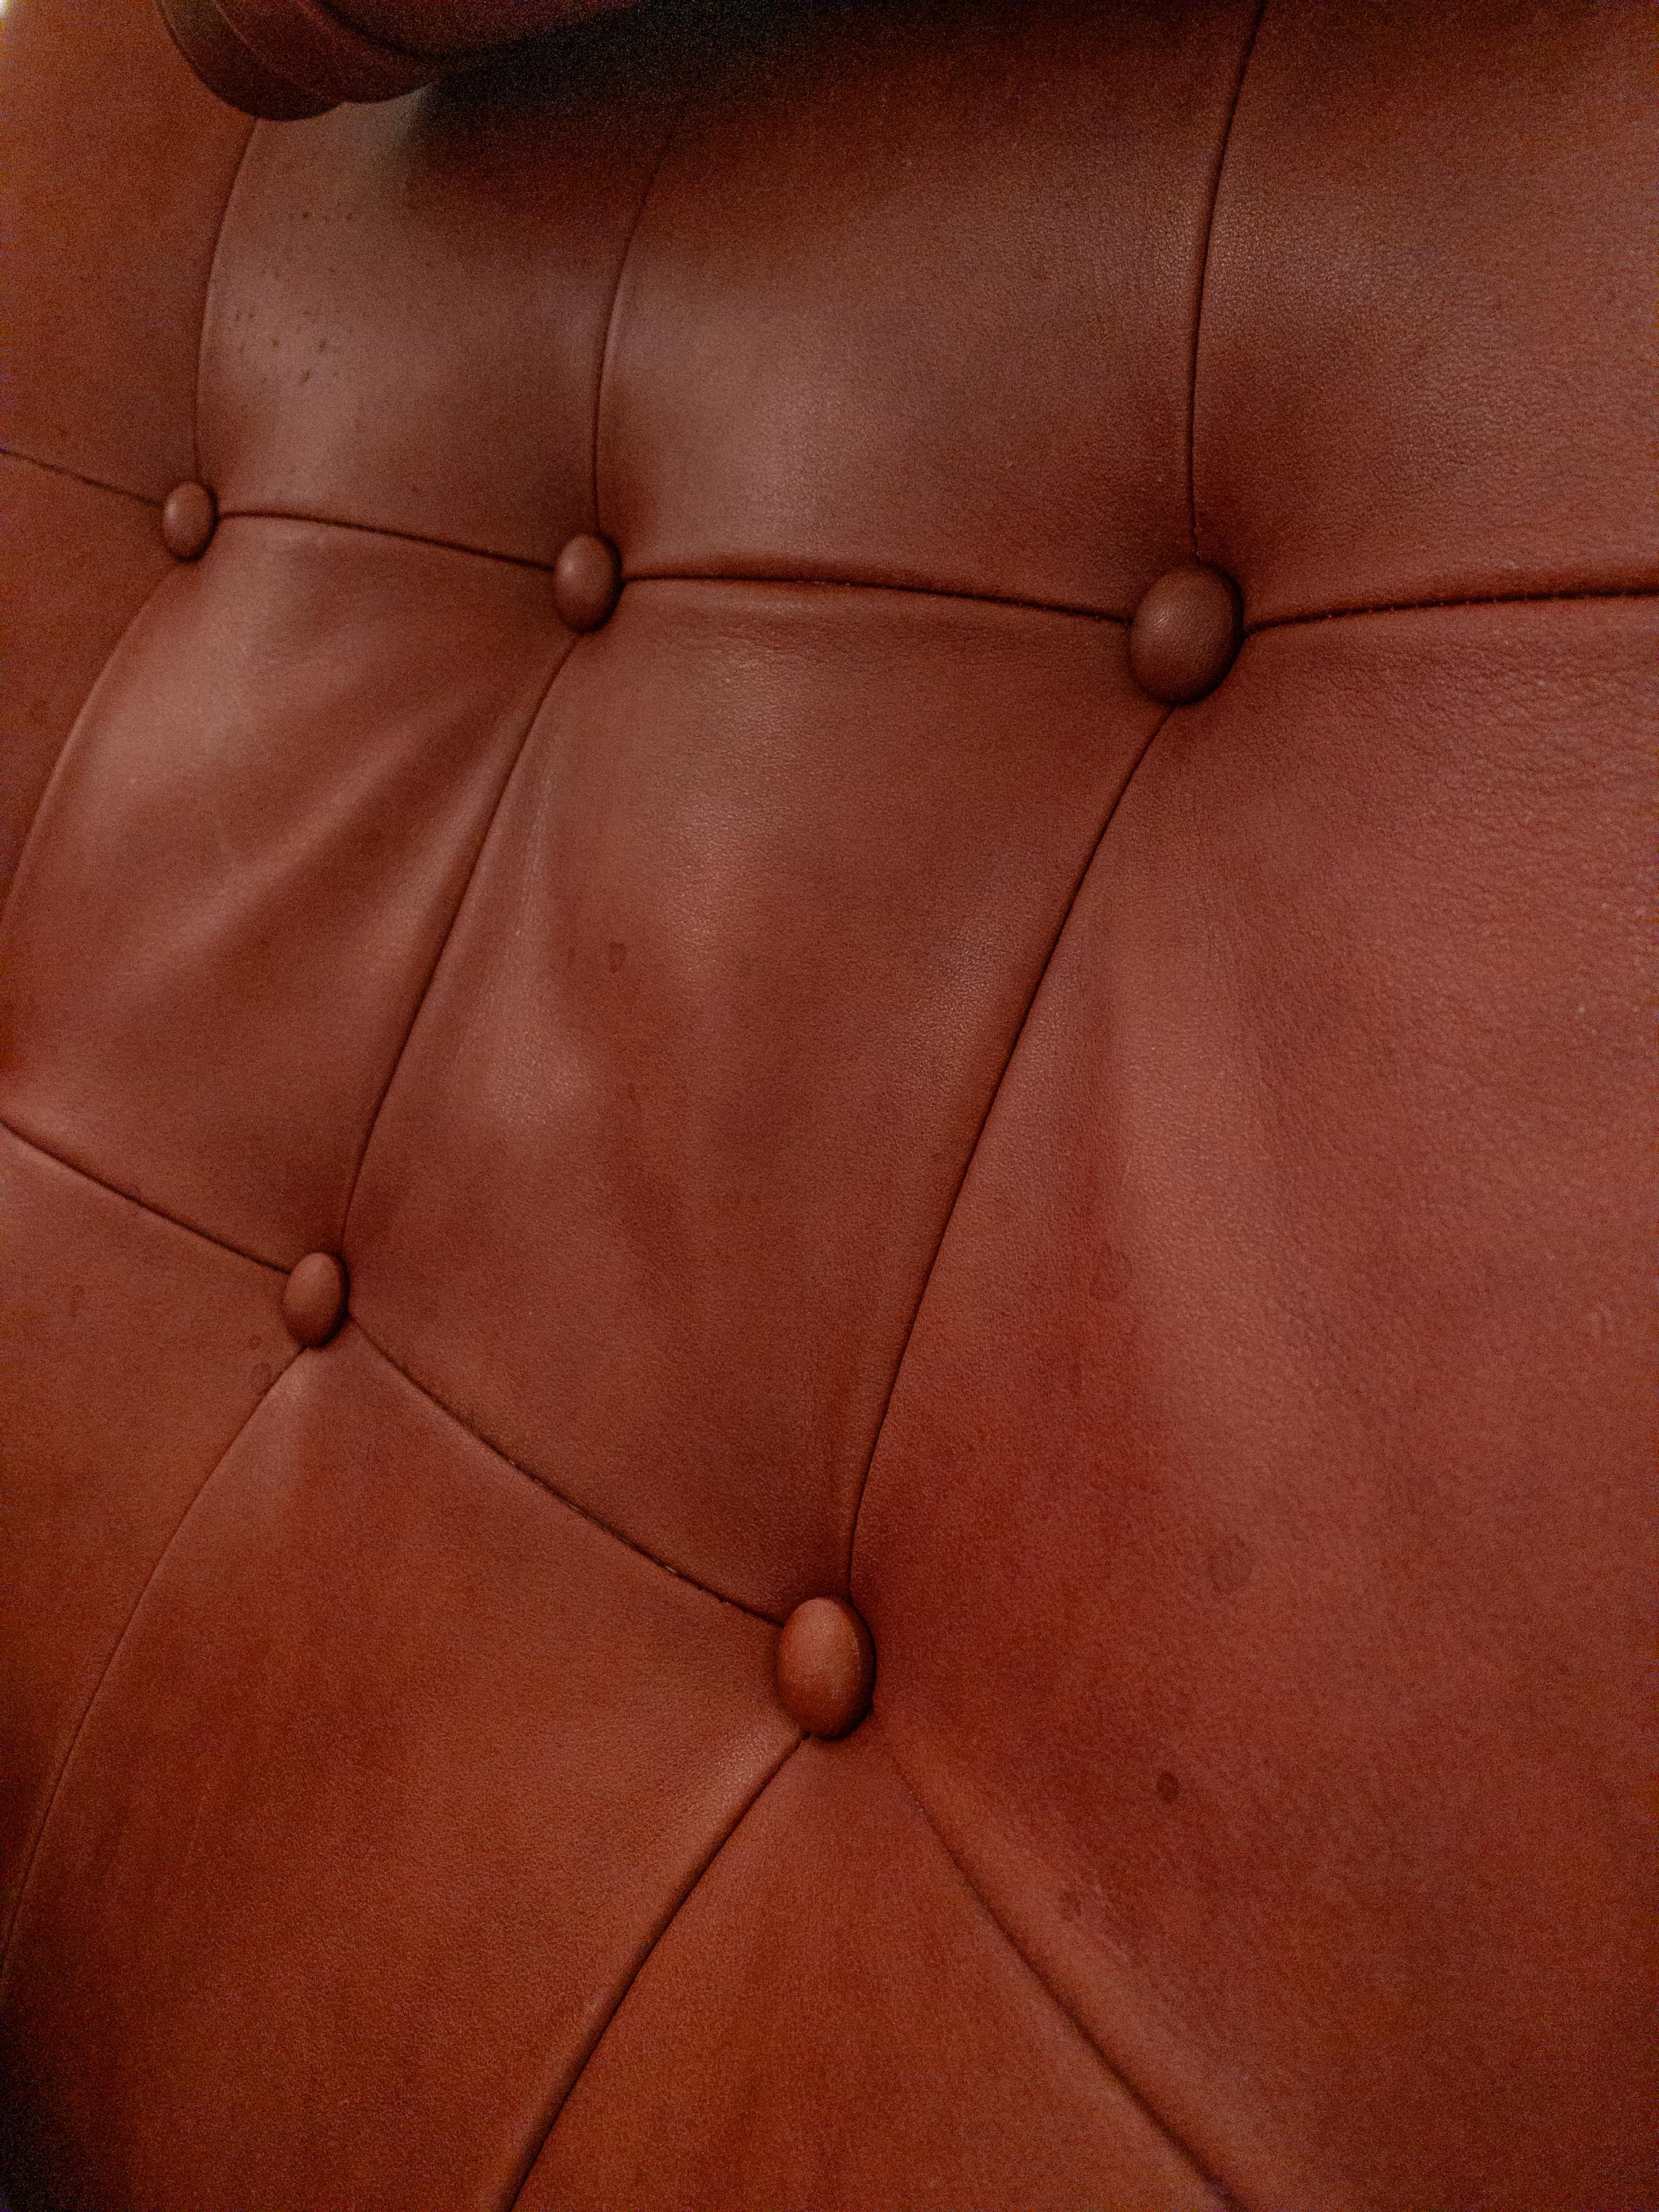 Tove & Edvard Kindt-Larsen Leather Lounge Chair For Sale 5